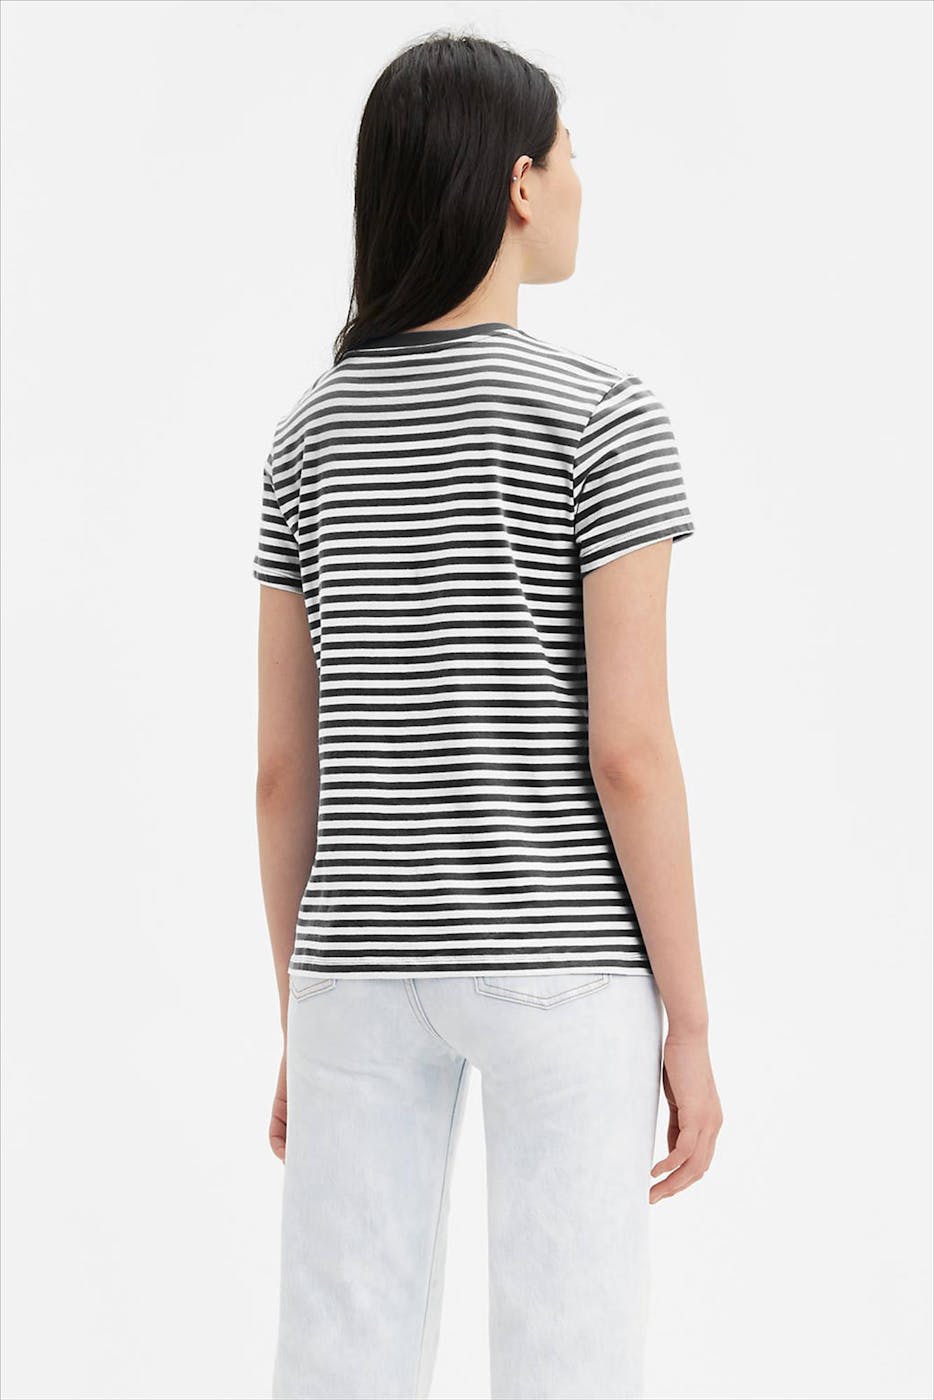 Levi's - Zwart-wit gestreepte T-shirt